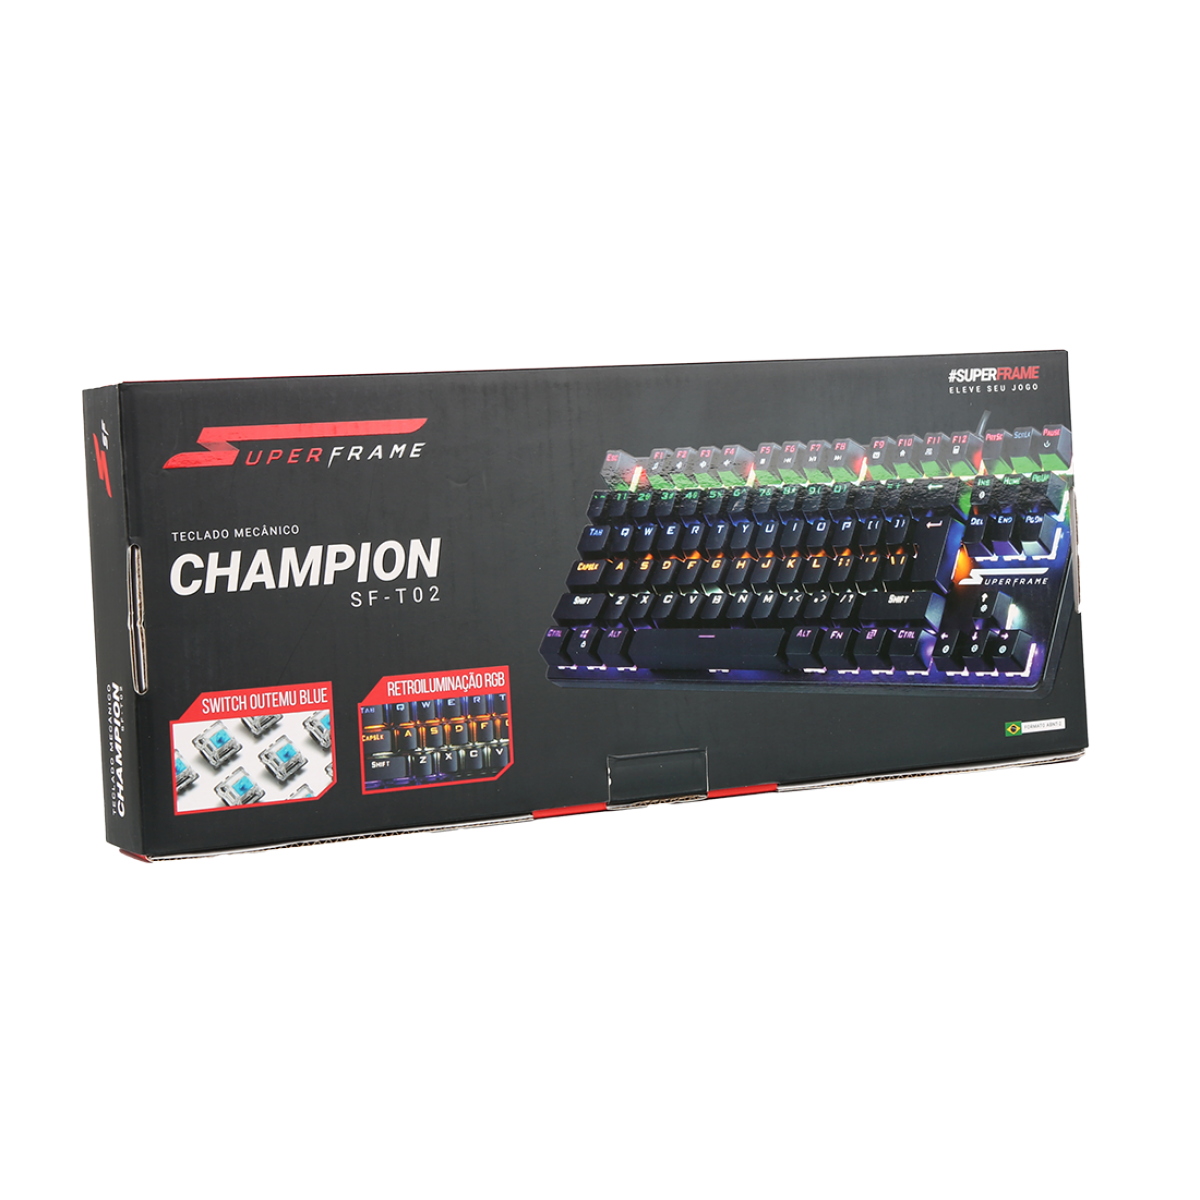 Teclado Mecânico Gamer SuperFrame CHAMPION, Rainbow, Switch Outemu Blue, ABNT2, Black   